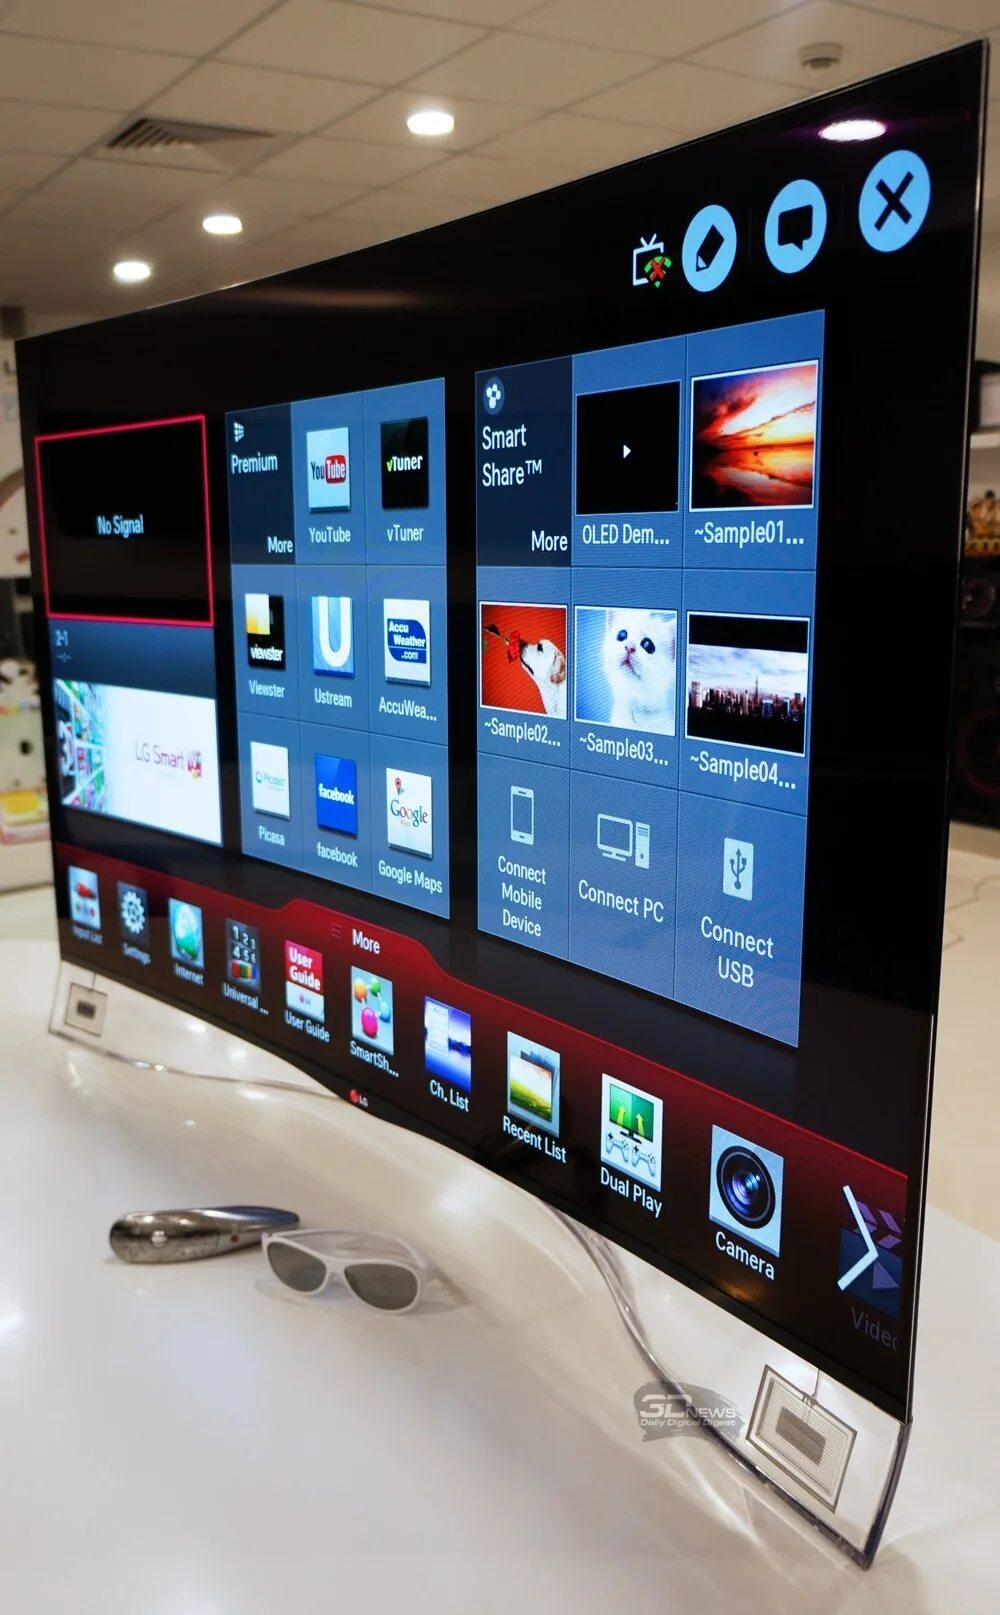 Телевизор LG OLED 55 изогнутый. Телевизоры в ДНС 55 дюймов сони. Samsung смарт ТВ изогнутый экран. Телевизор смарт Лджи ДНС 149. Самсунг а 55 днс